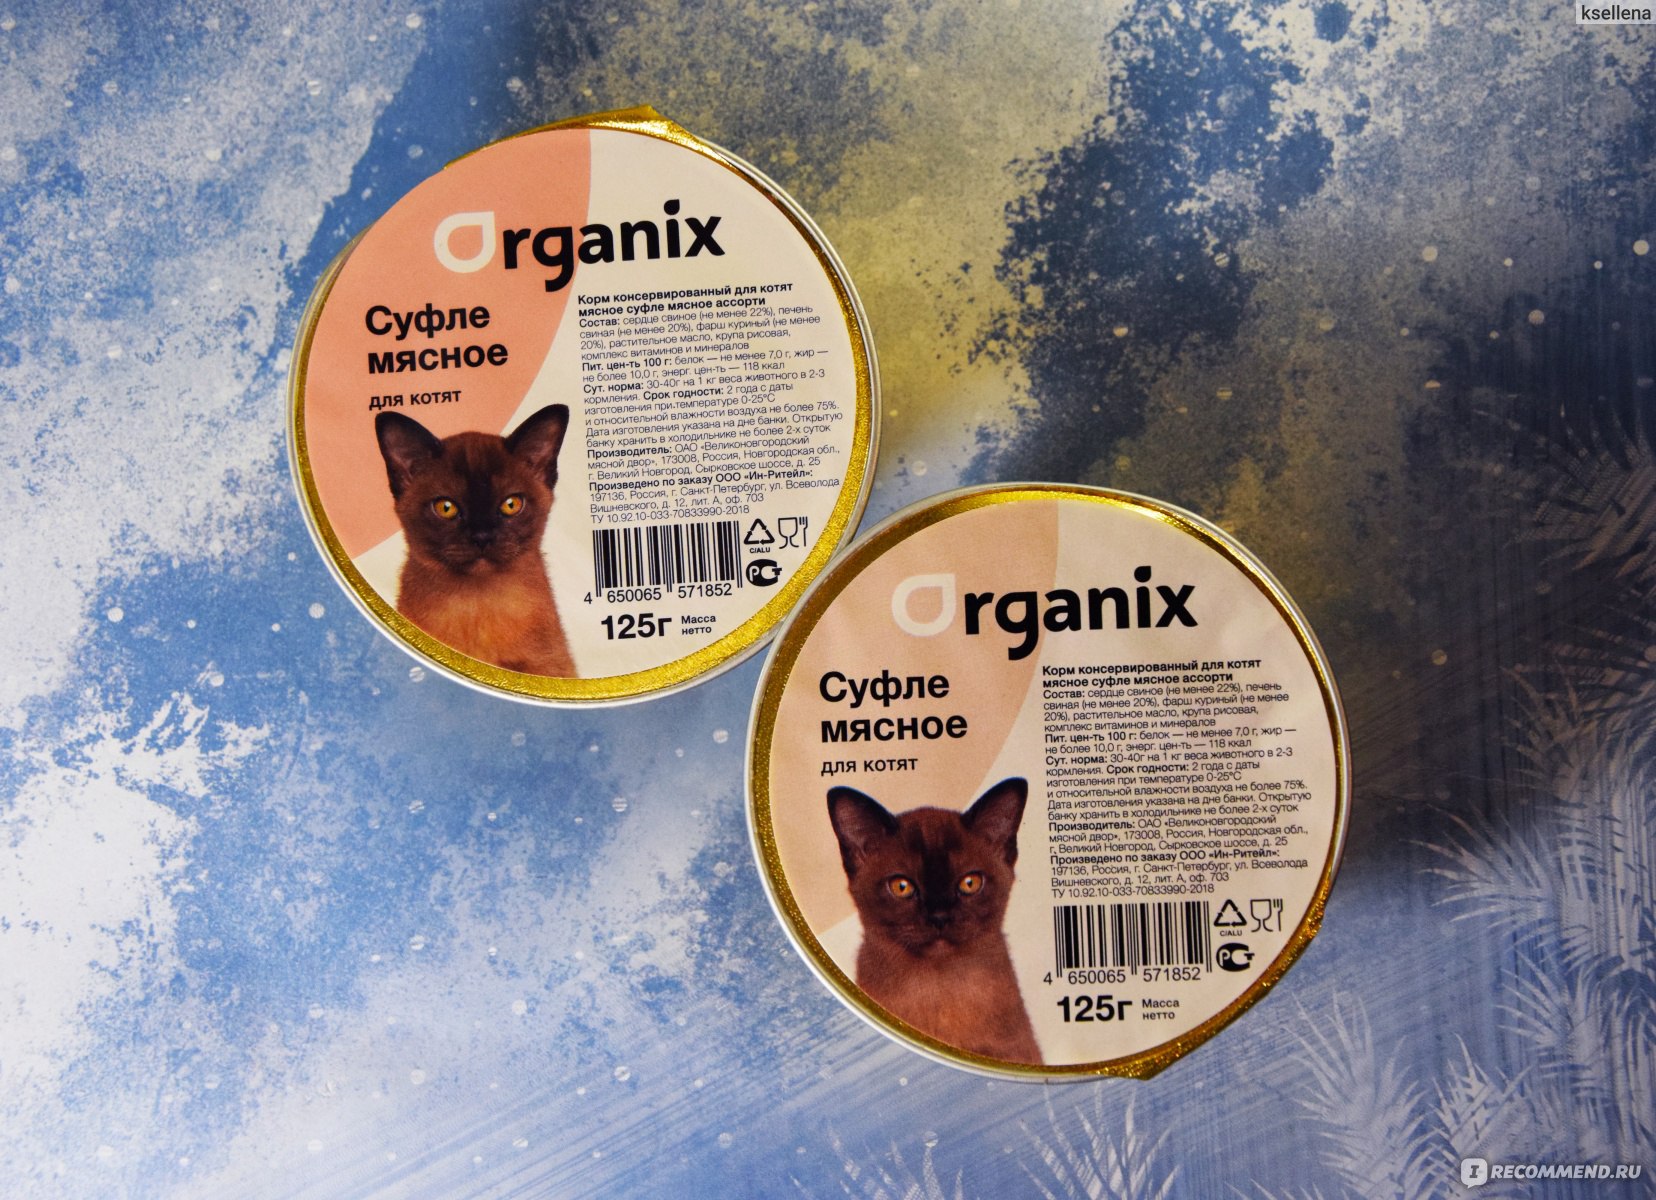 Organix корм влажный для котят